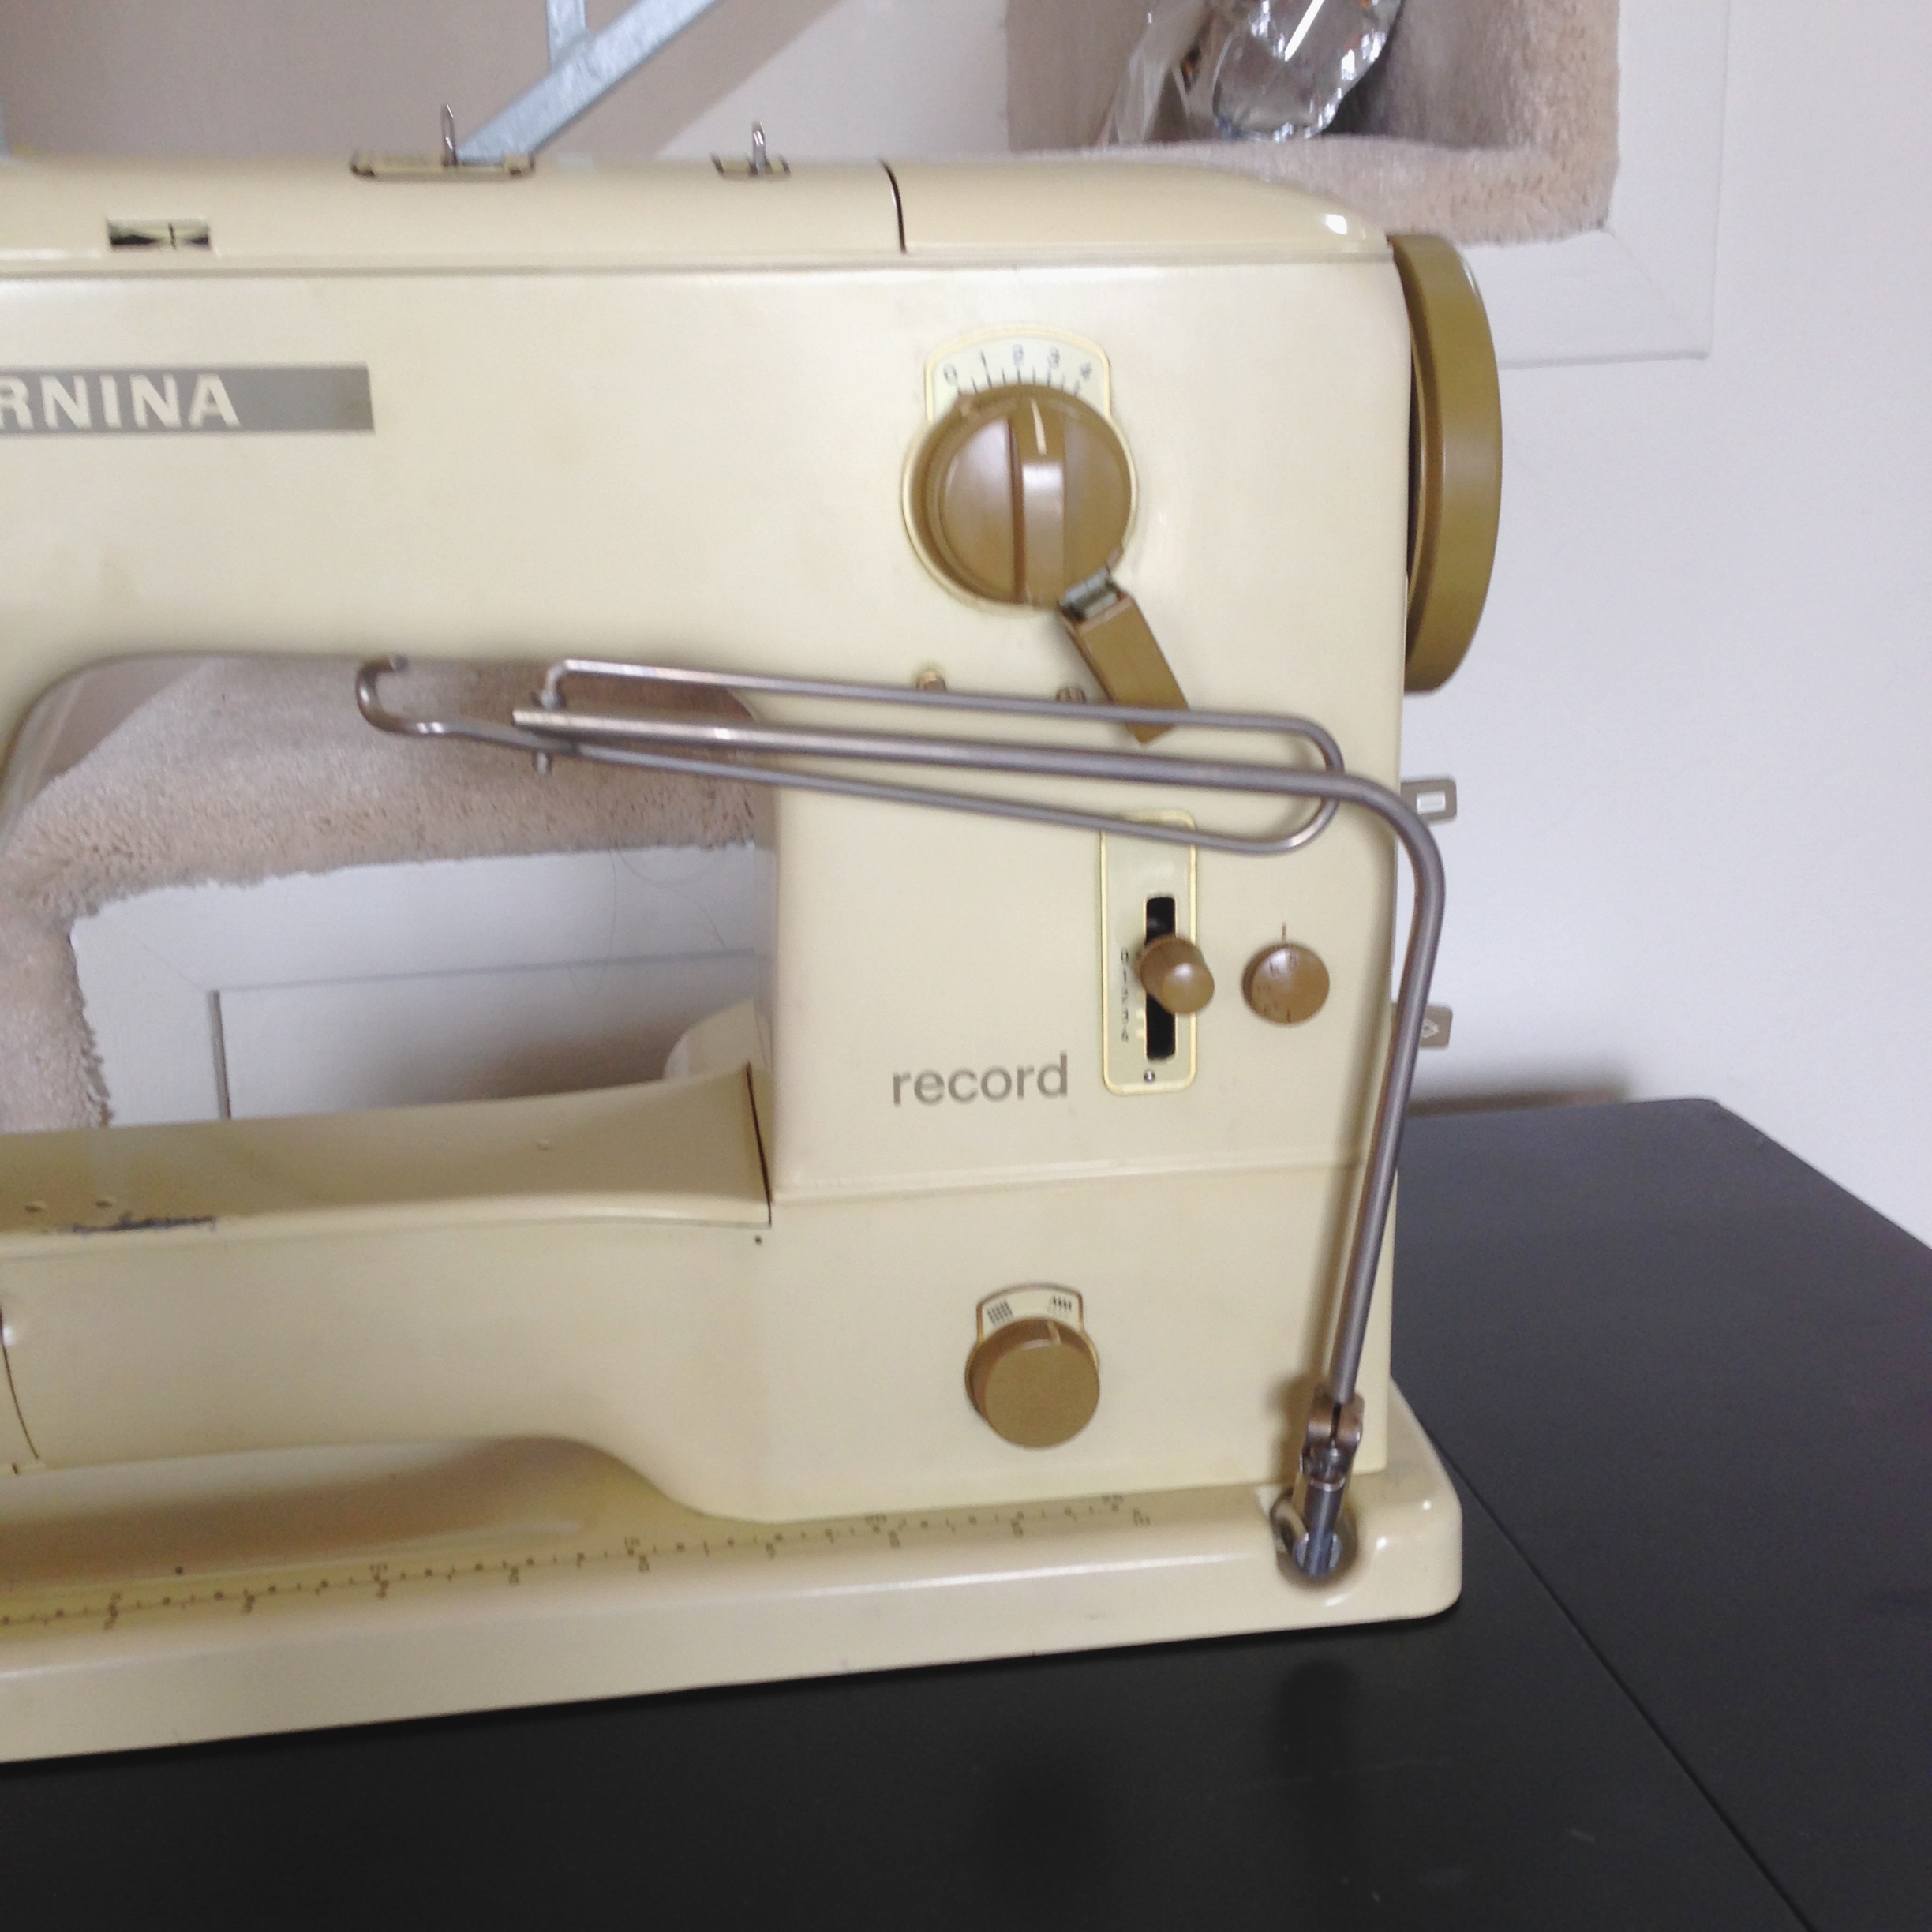 Vintage bernina sewing machines